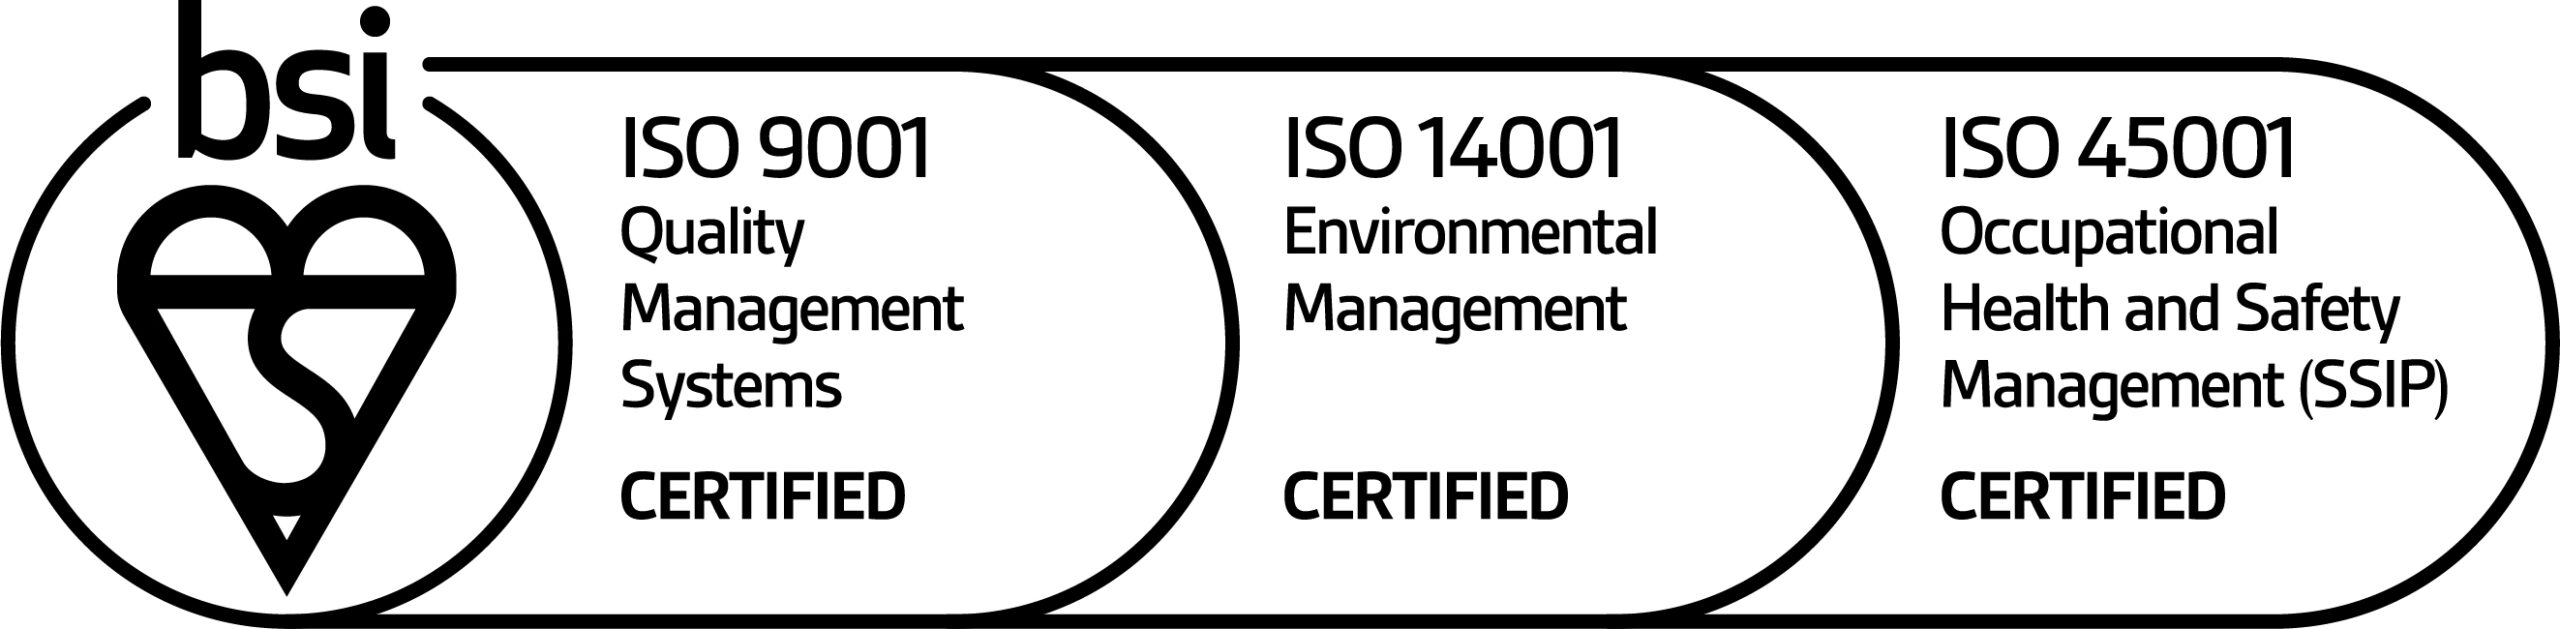 bsi - ISO 9001, ISO 14001, ISO 45001